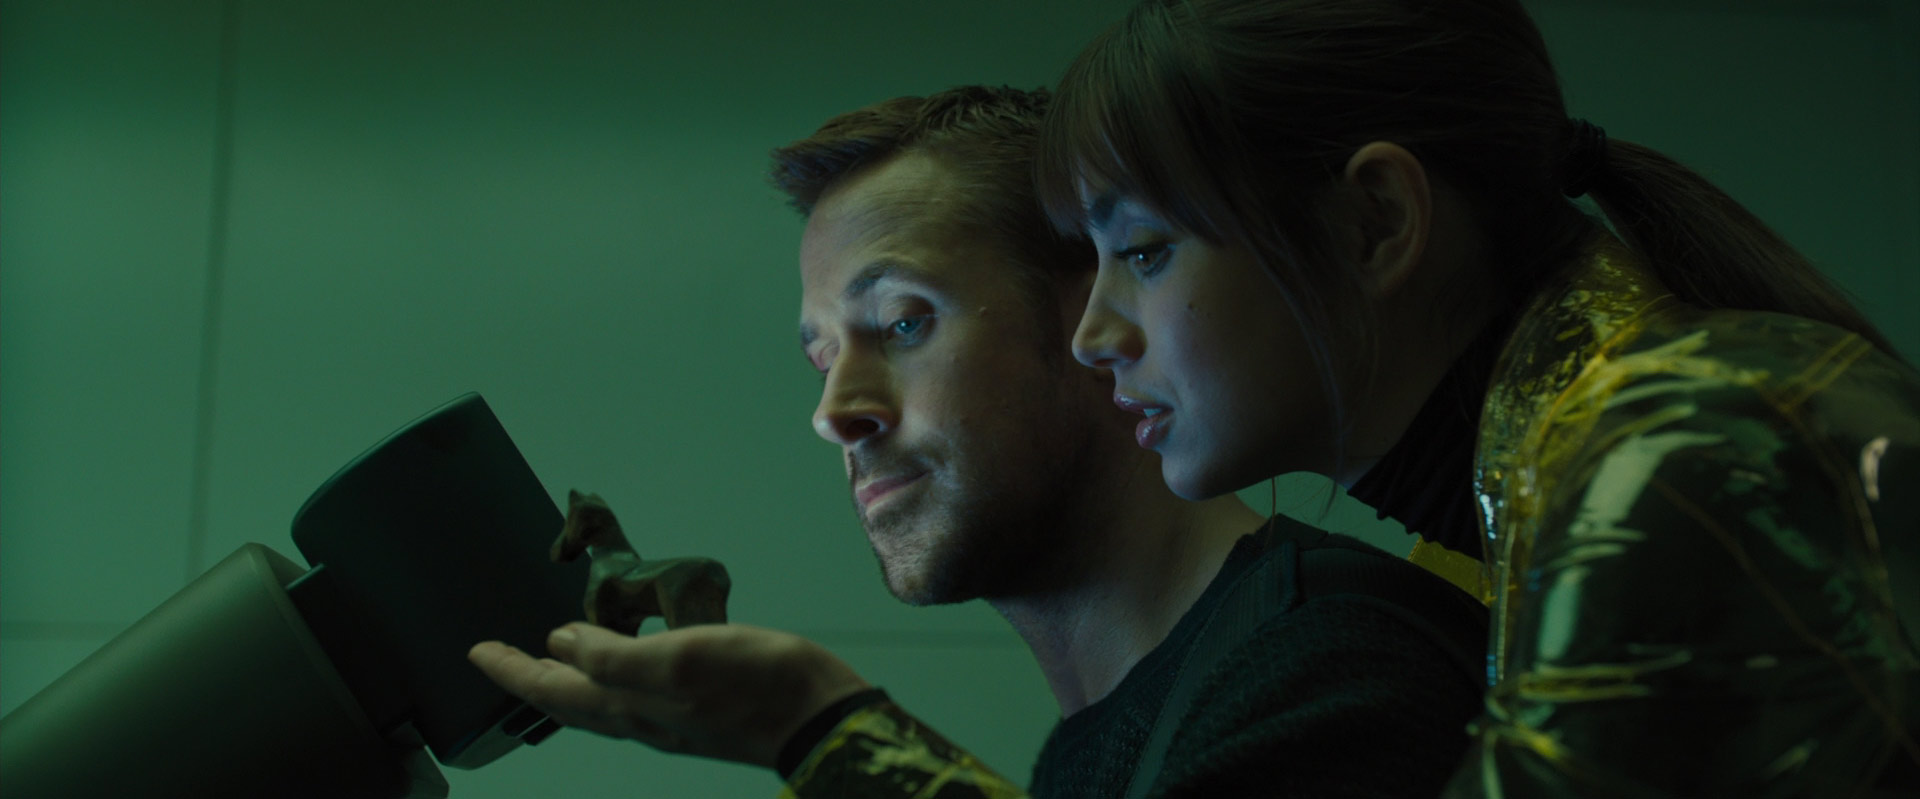 Ryan Gosling, Ana de Armas in Blade Runner 2049